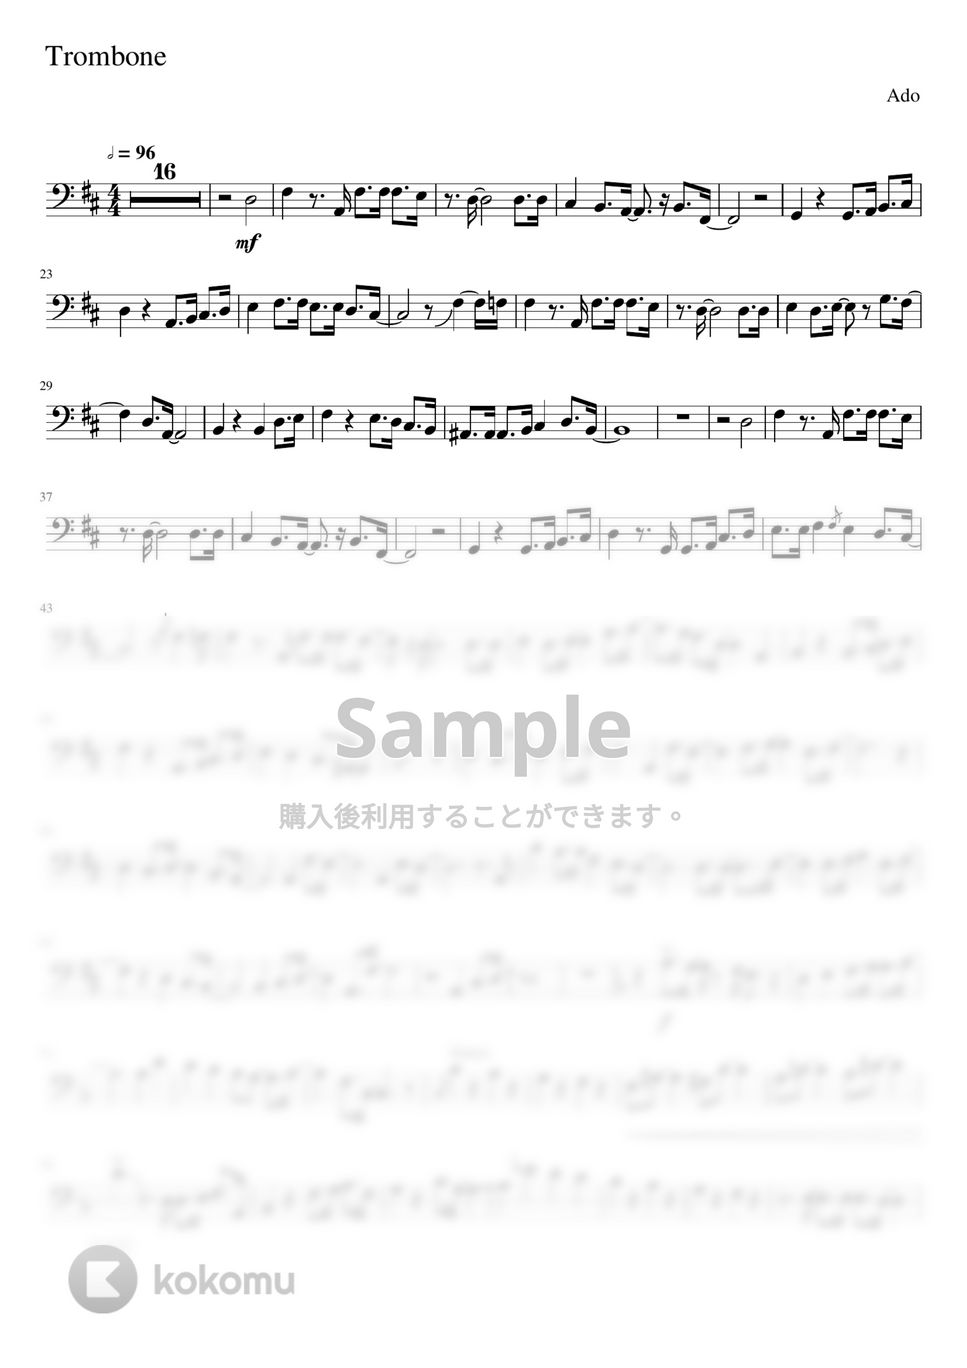 Ado - ギラギラ (-トロンボーンソロ譜- 原キー) by Creampuff